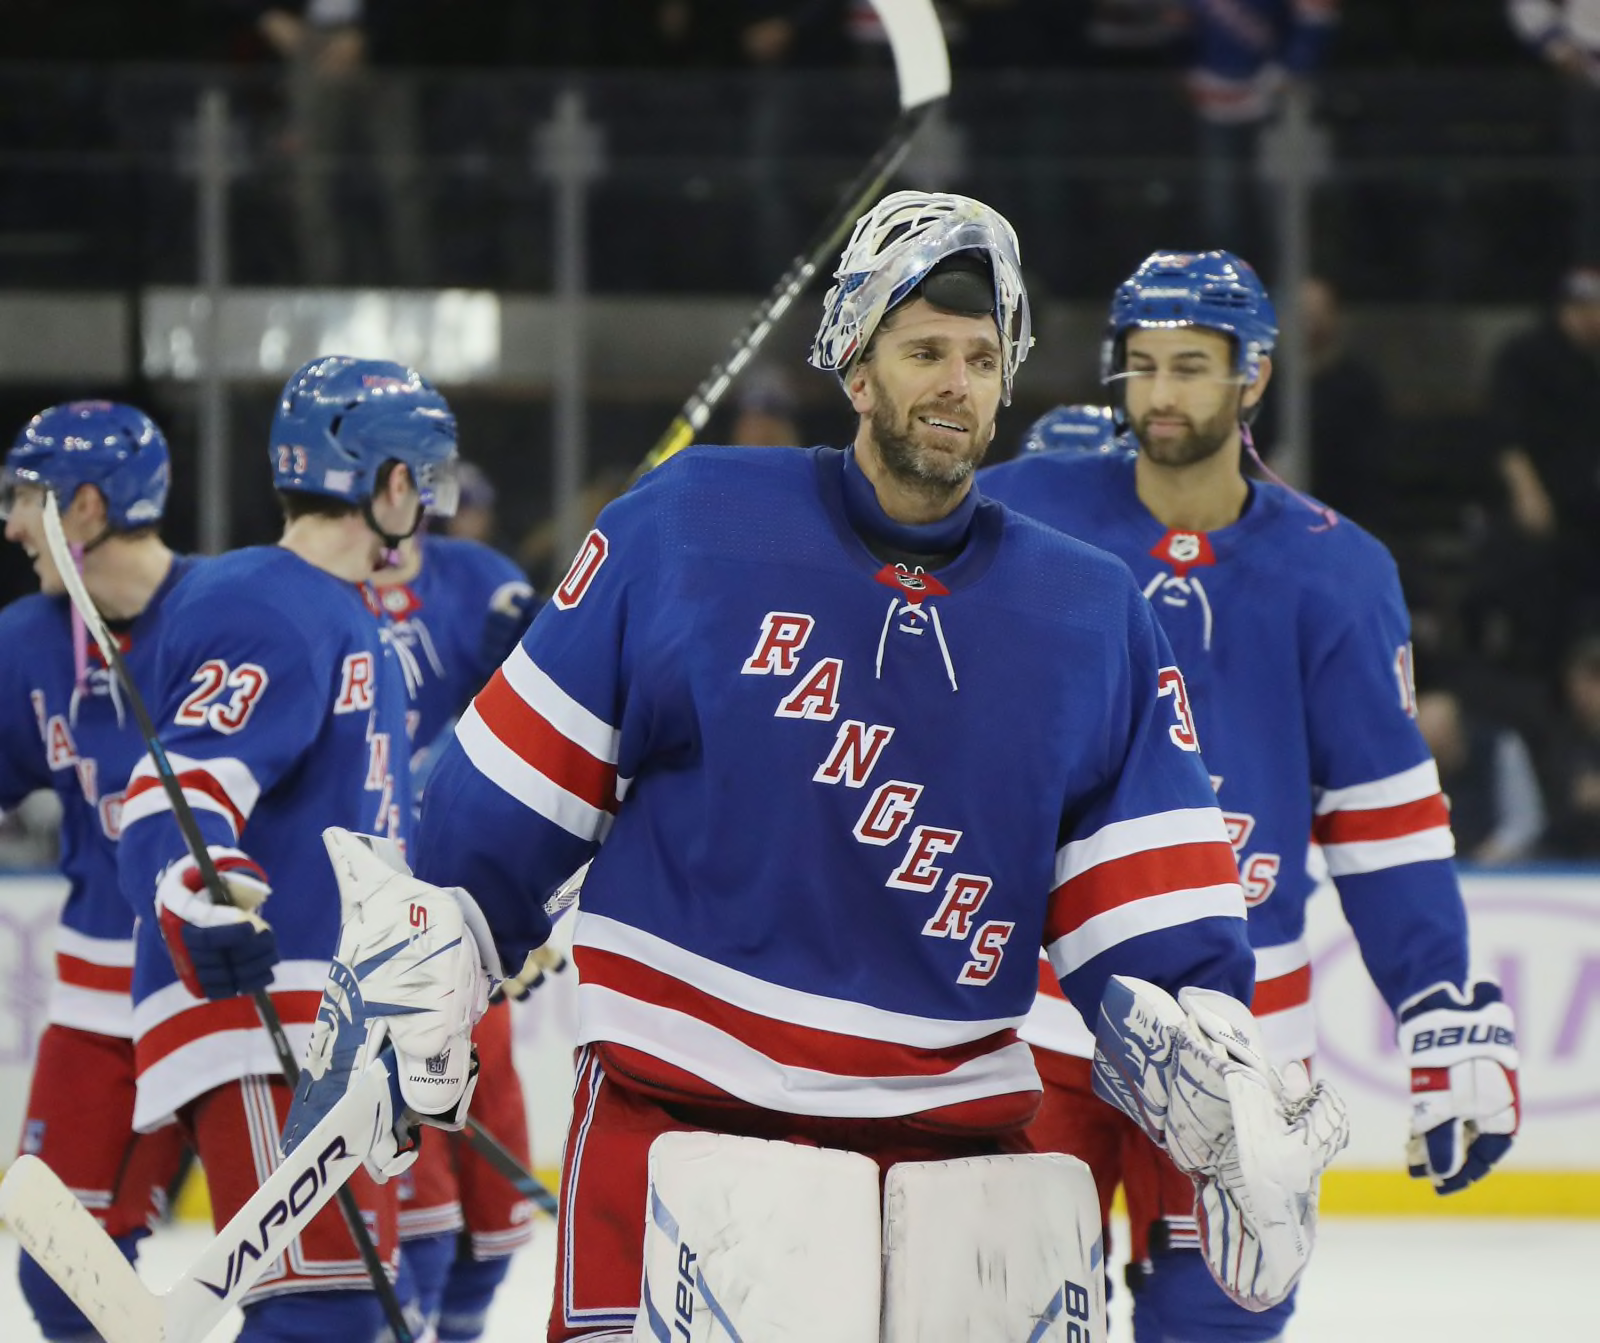 Weekend NHL picks: Back the underdog Rangers as Henrik Lundqvist